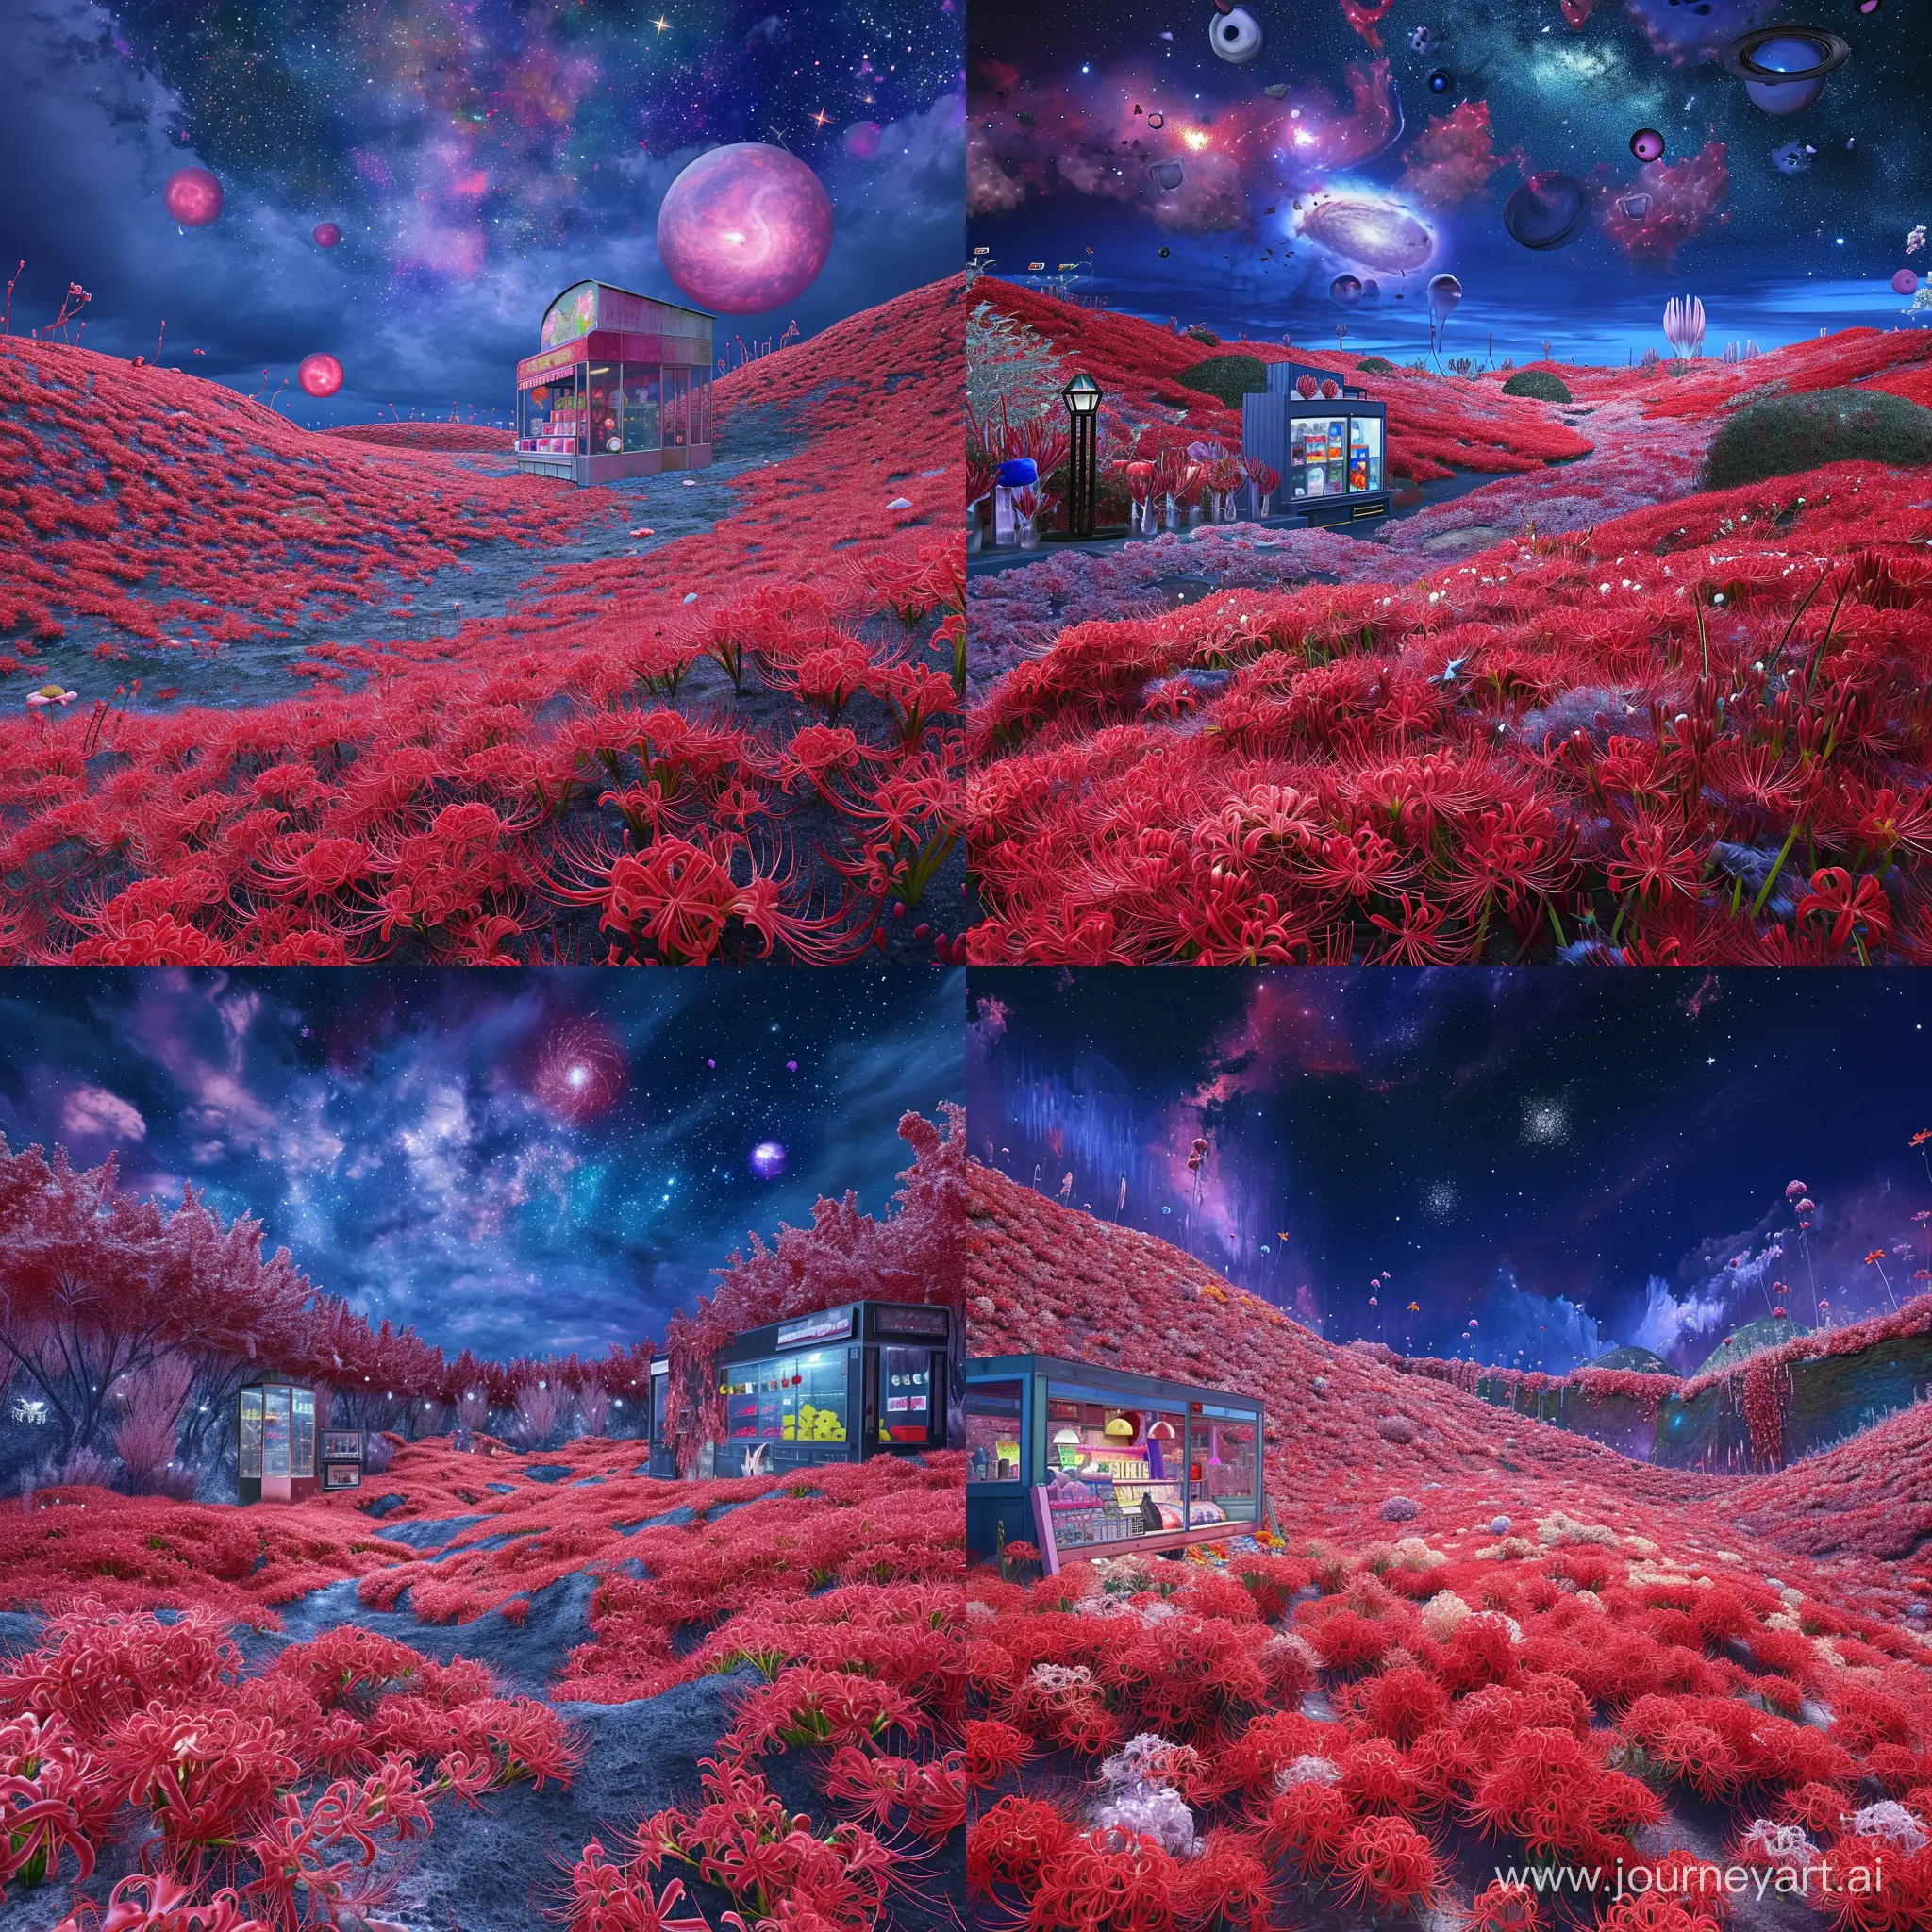 Surreal-Garden-of-Cosmic-Dreams-Enchanting-Lycoris-Radiata-and-Celestial-Wonders